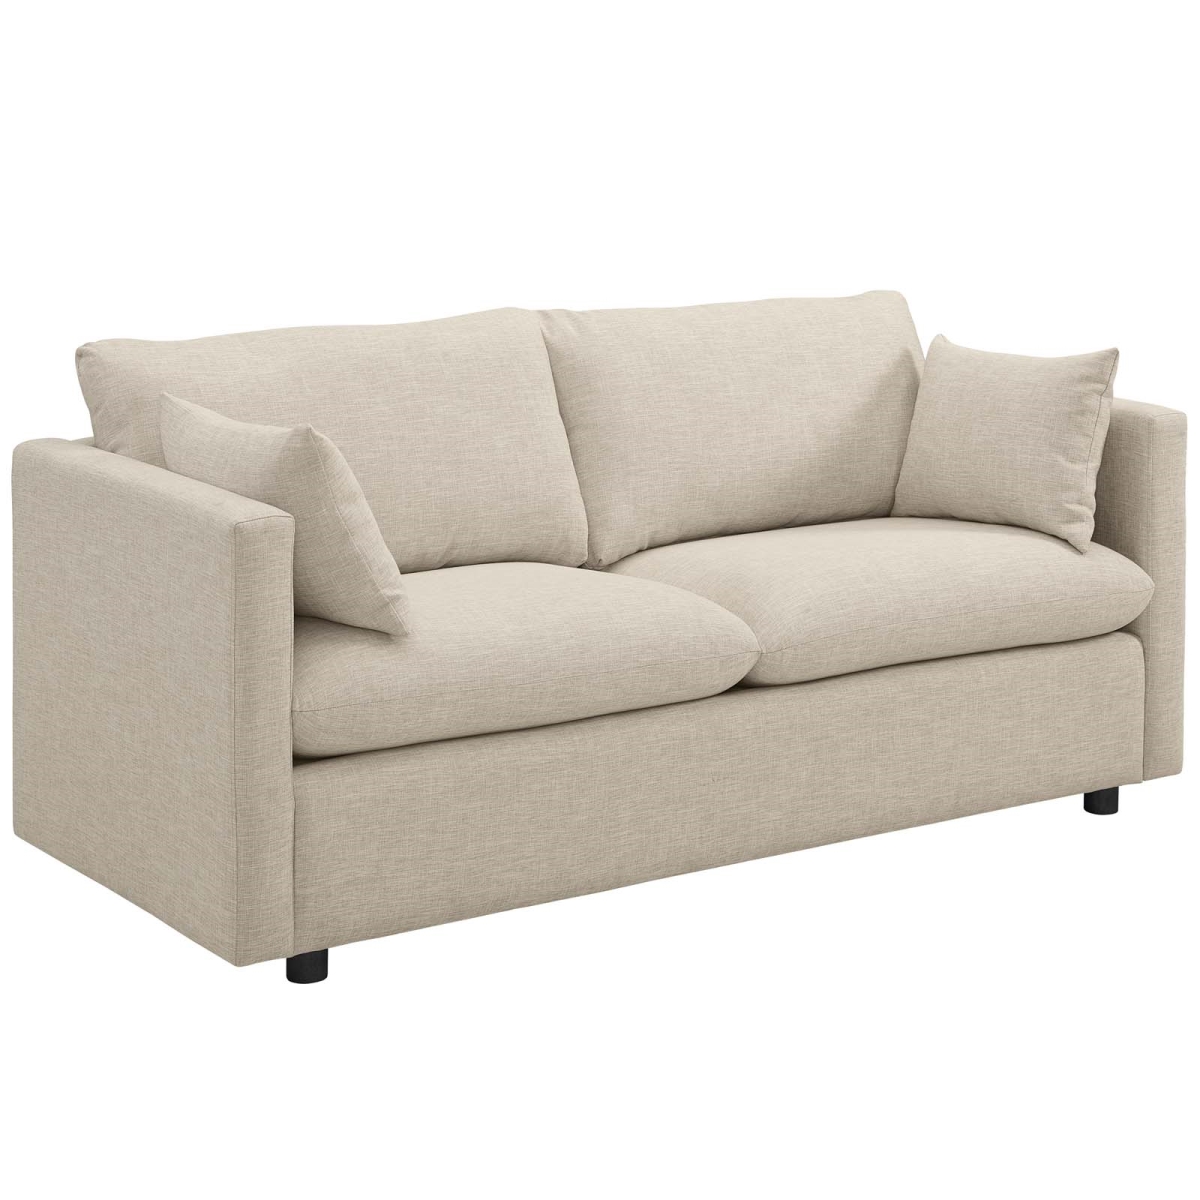 Eei-3044-bei Activate Upholstered Fabric Sofa - Beige, 33.5 X 70 X 31 In.